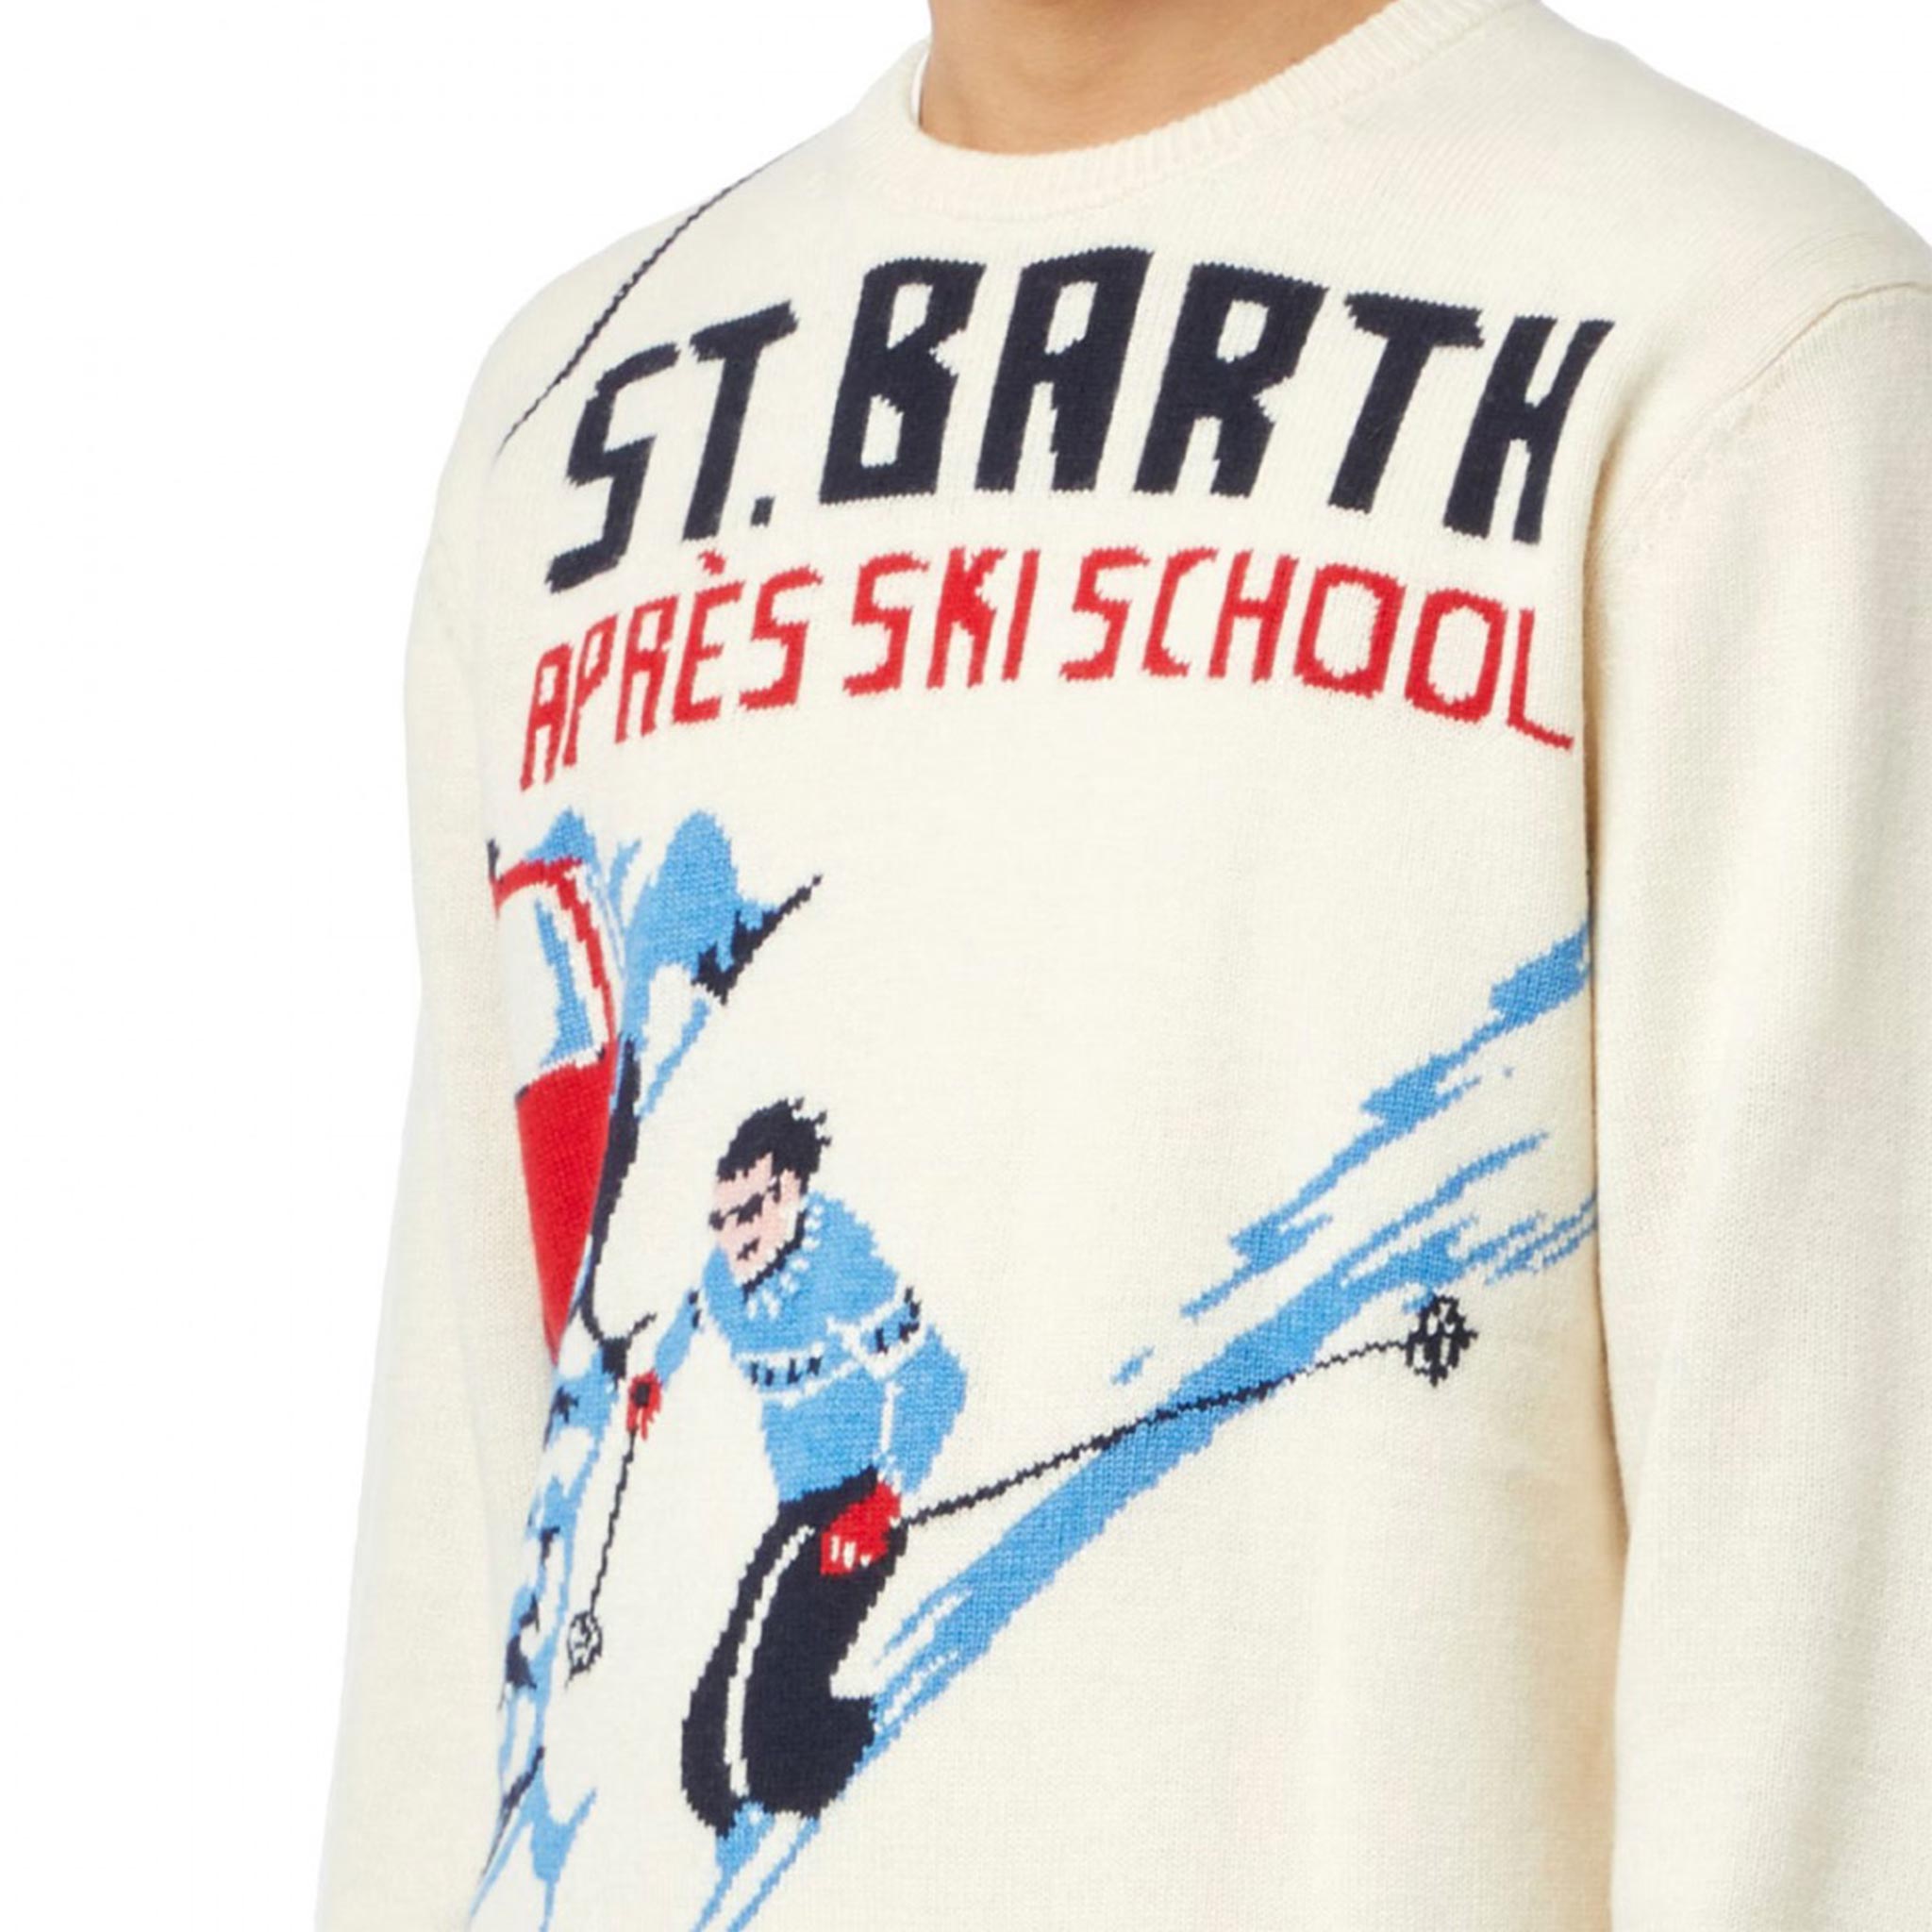 Apres Ski School Sweater